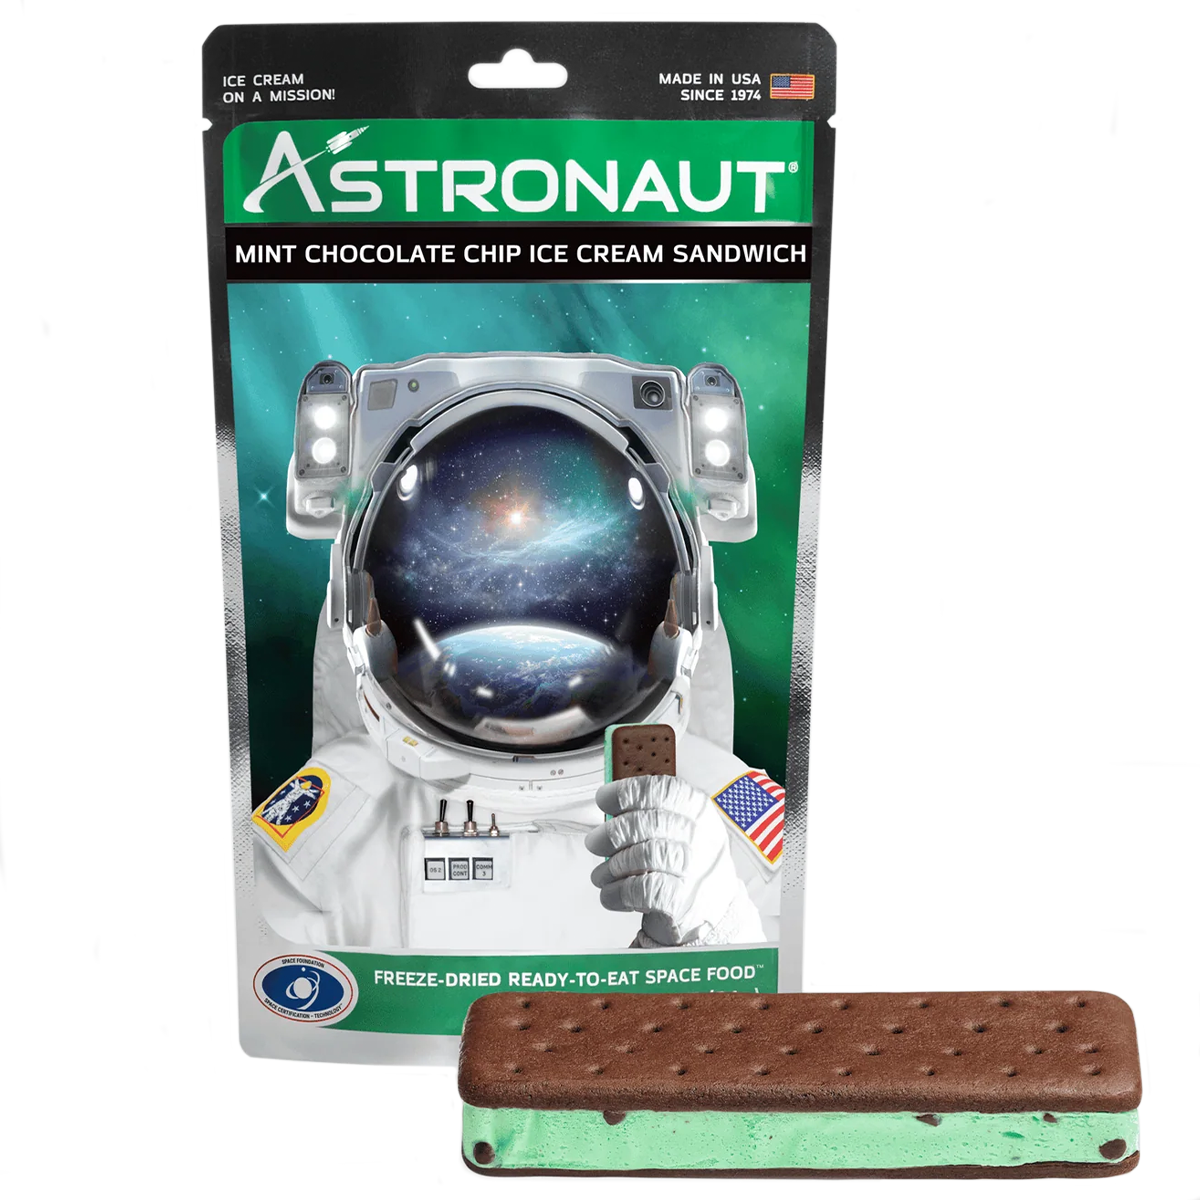 Astronaut Ice Cream Sandwich - Mint Chocolate Chip